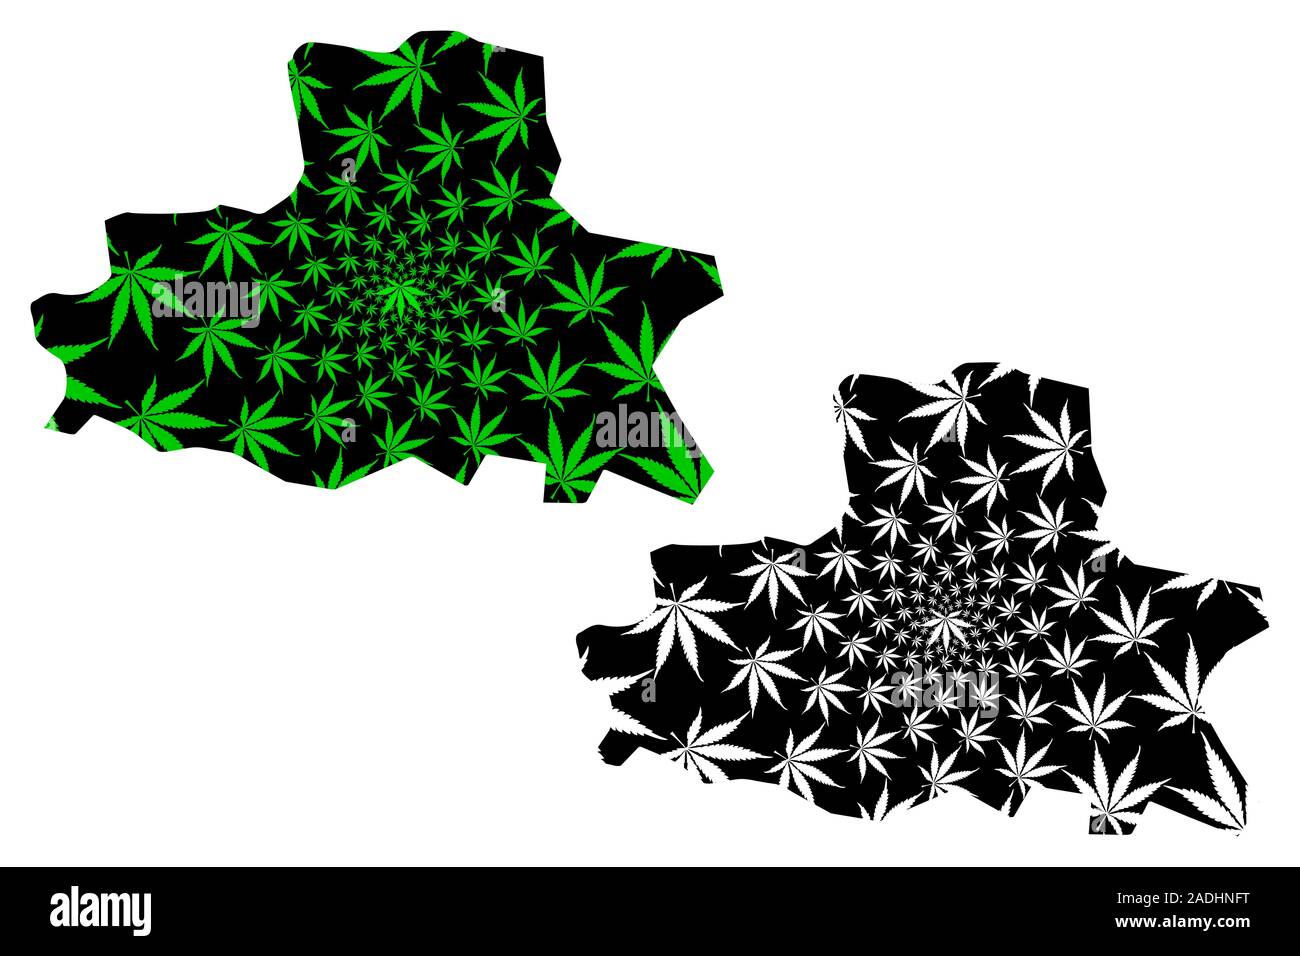 Samarcanda regione (Repubblica di Uzbekistan, regioni di Uzbekistan) mappa è progettato Cannabis leaf verde e nero, Samarcanda mappa fatta di marijuana (marih Illustrazione Vettoriale